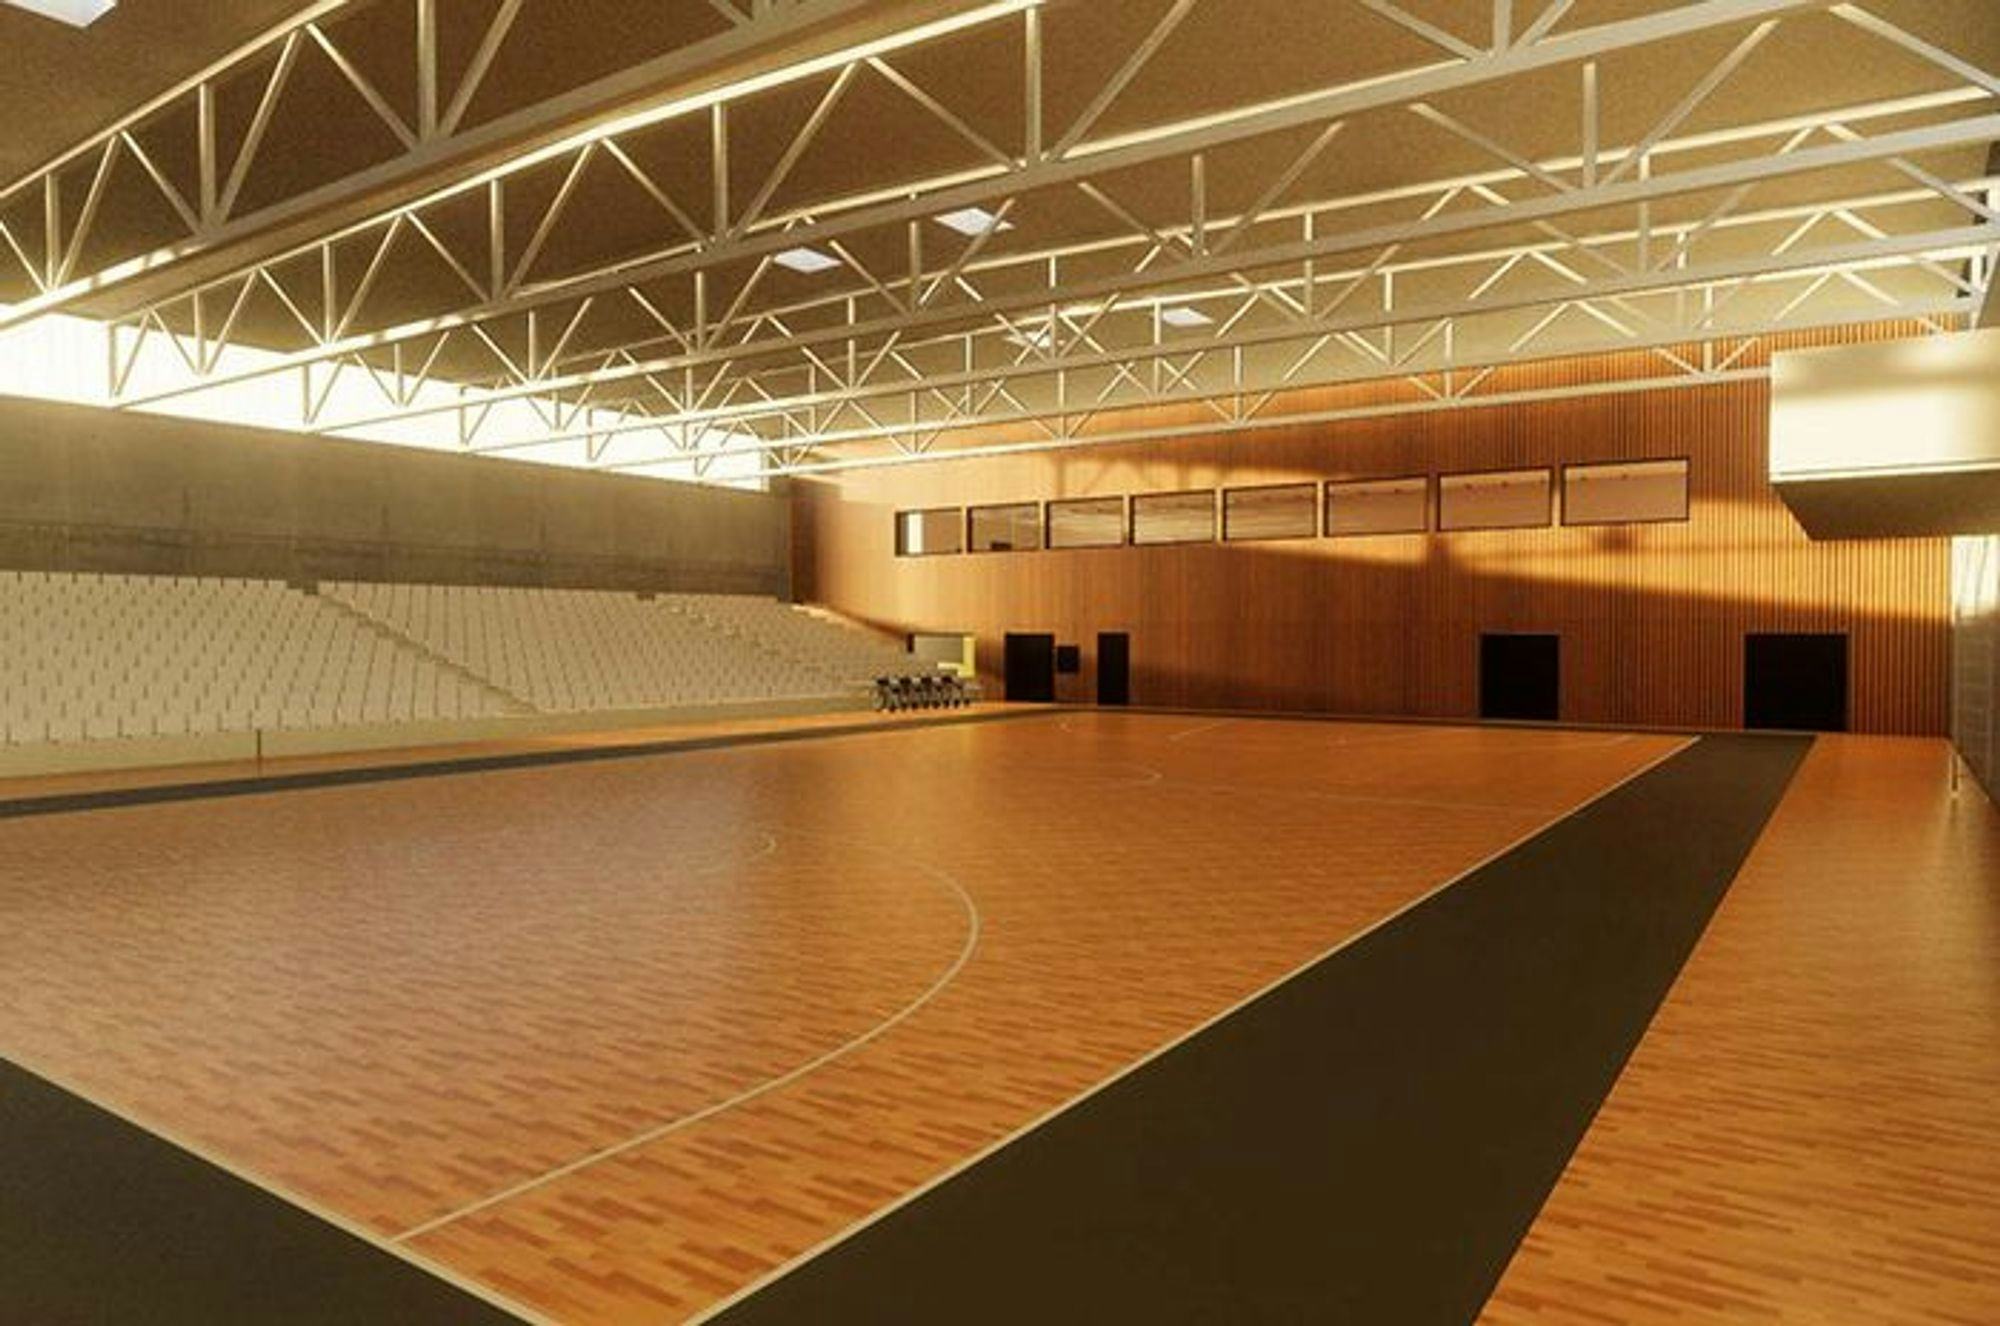 A large sports hall 